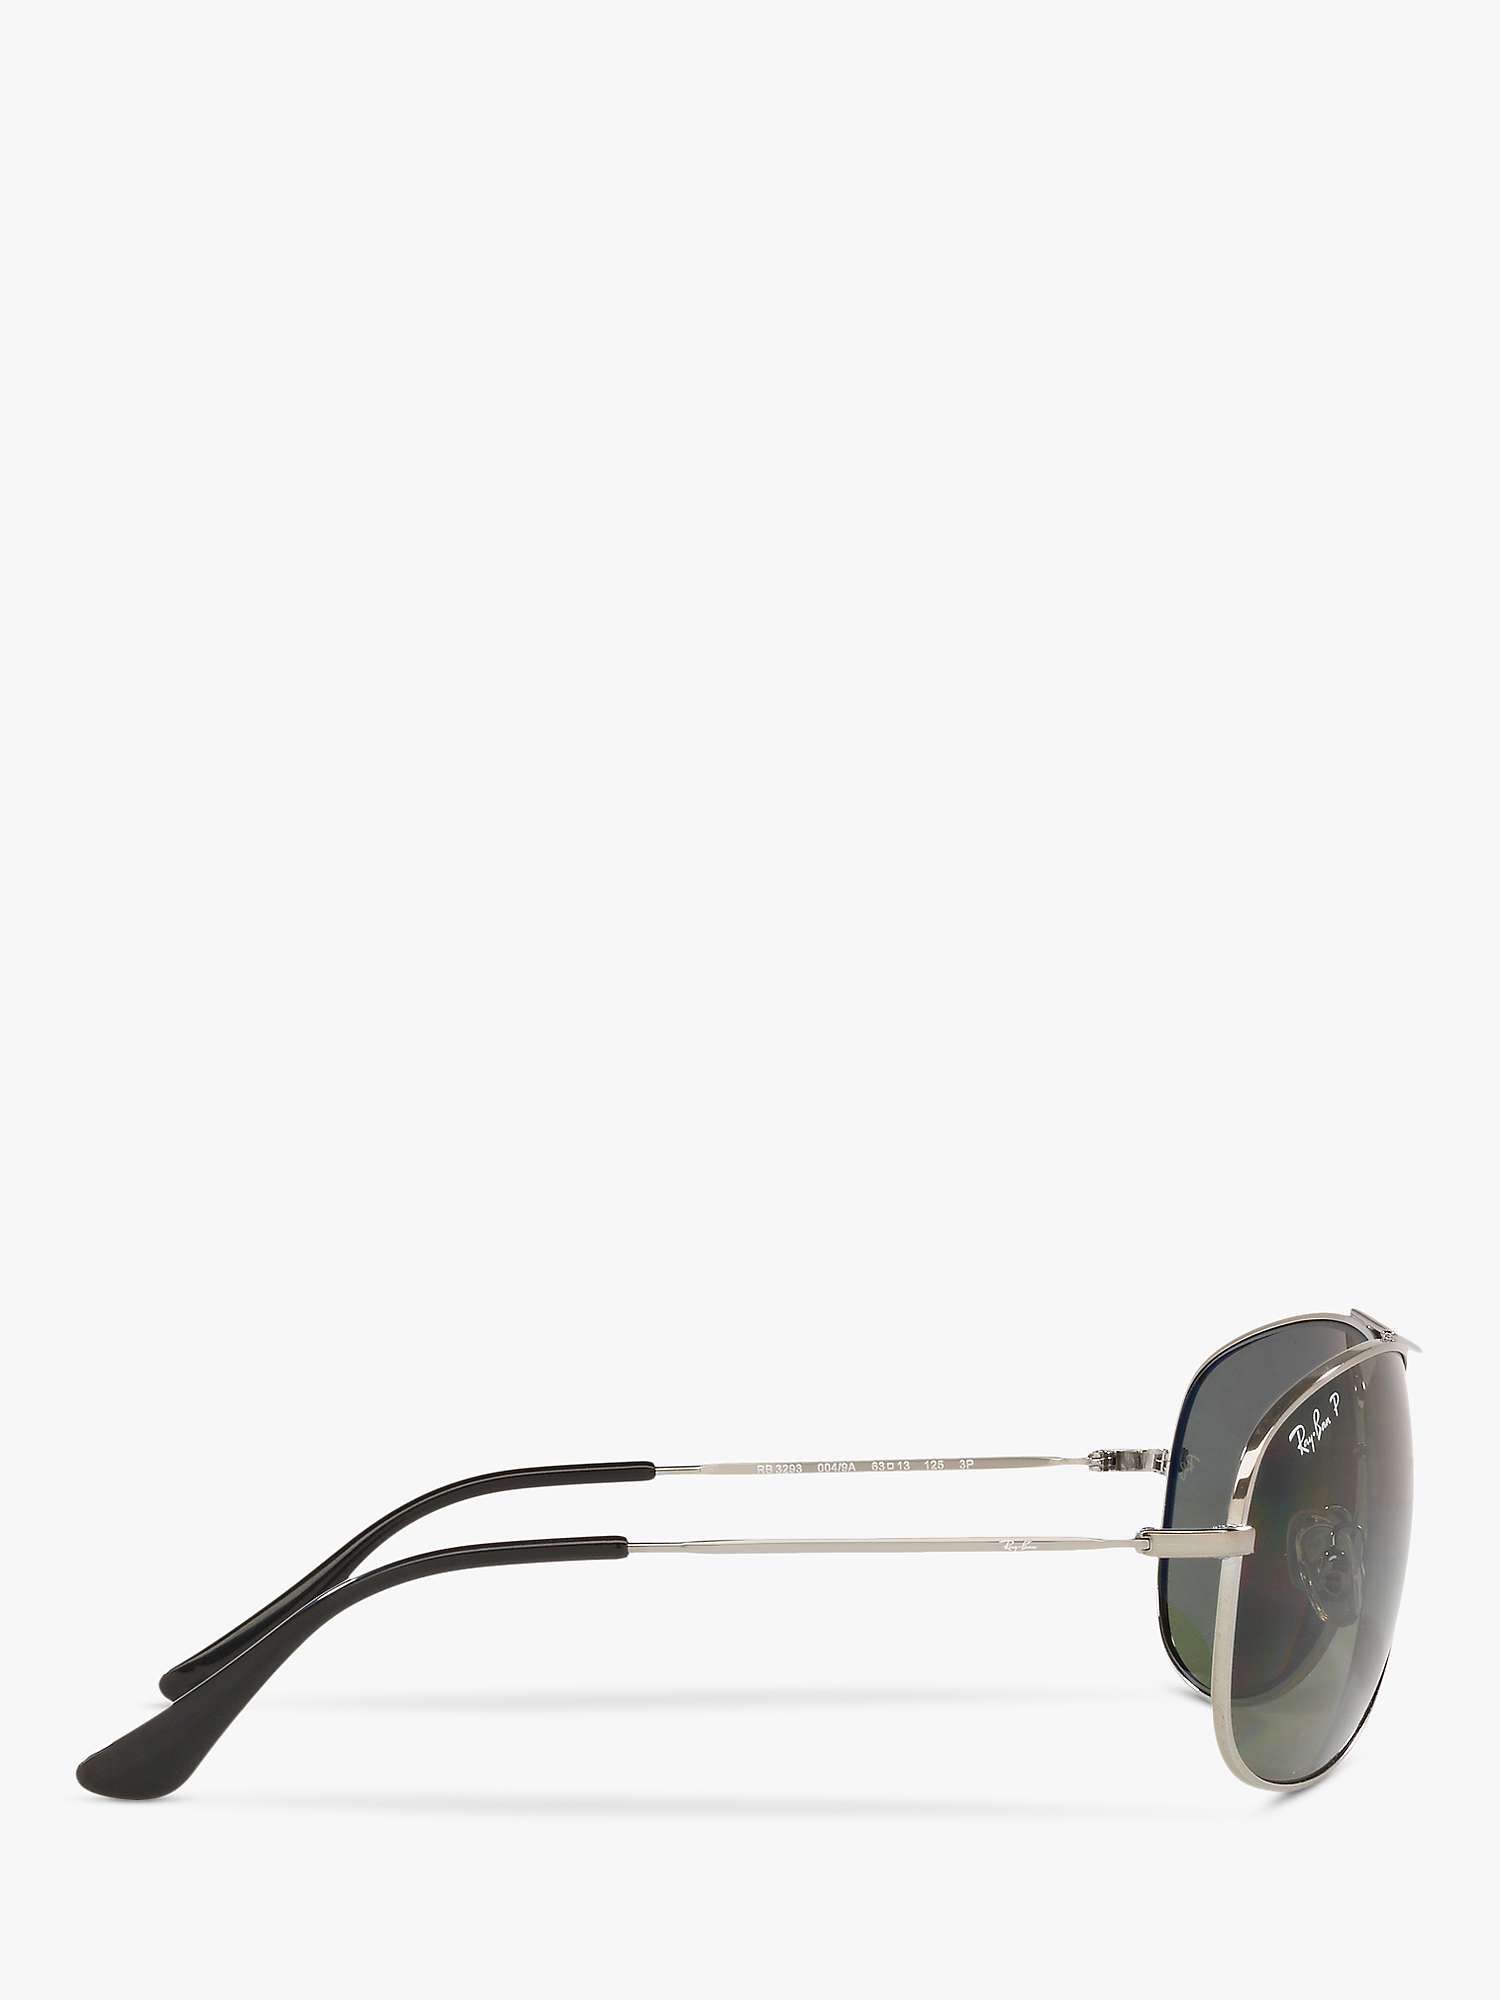 Buy Ray-Ban RB3293 Men's Polarised Aviator Sunglasses, Gunmetal/Green Online at johnlewis.com